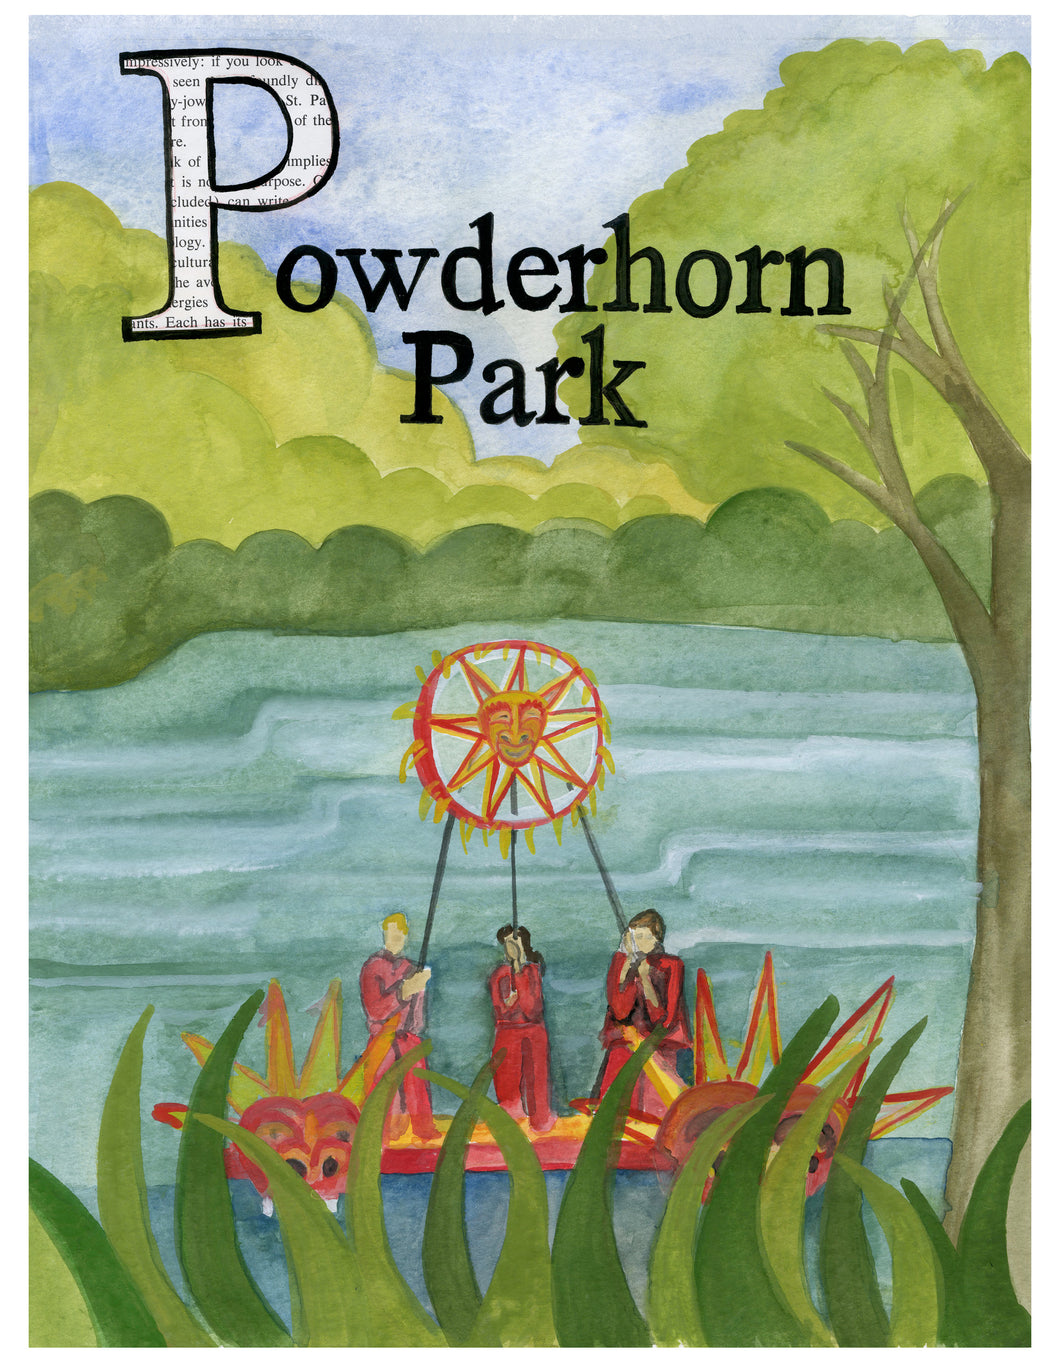 P is for Powderhorn Park